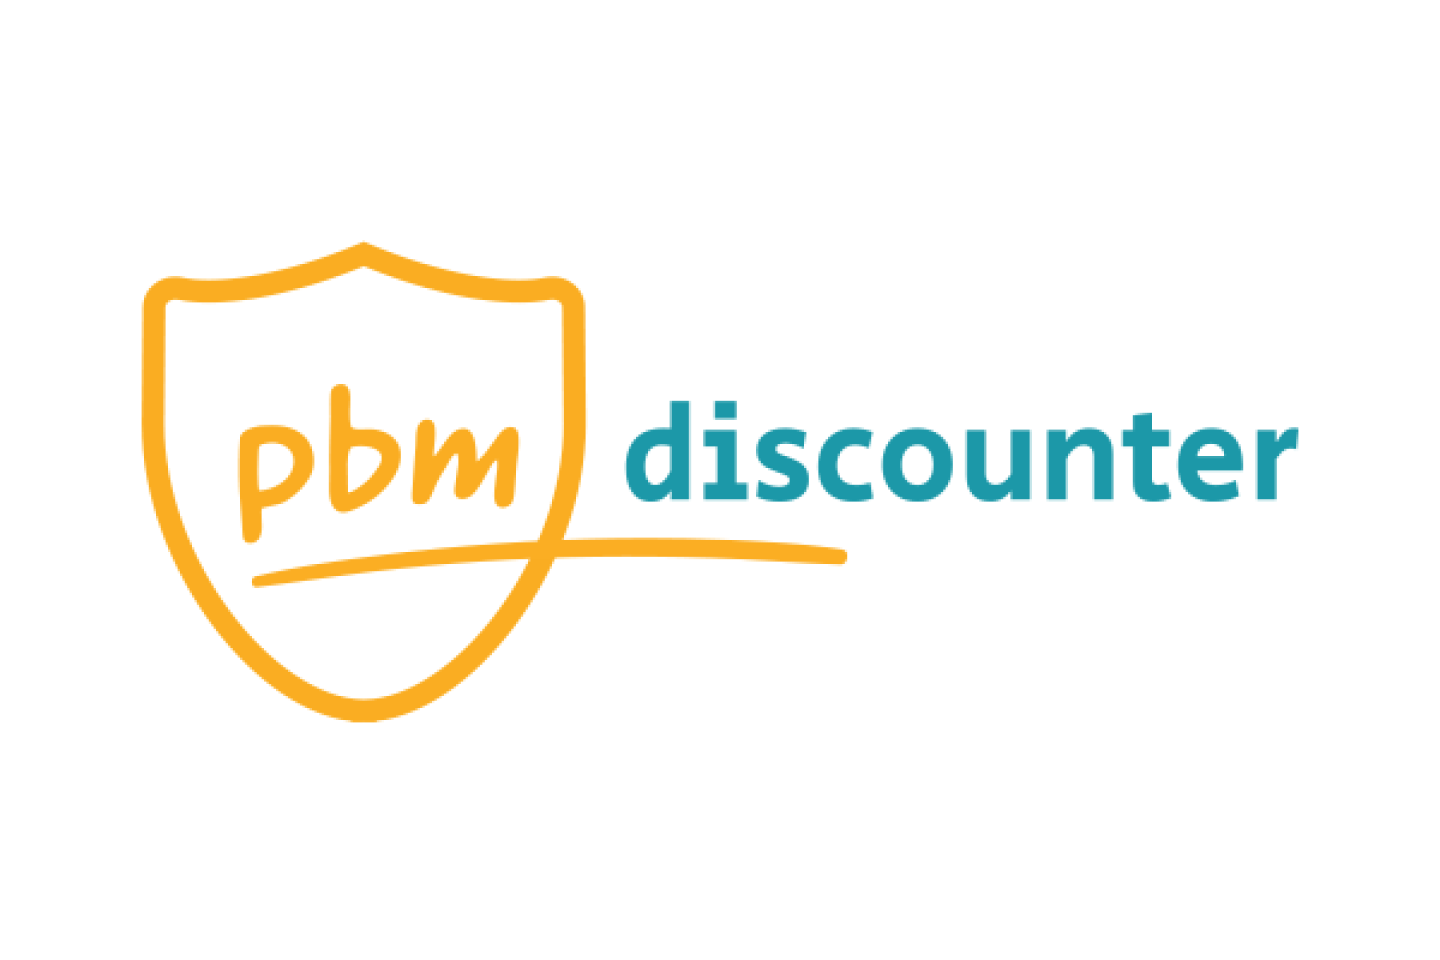 PBM discounter logo